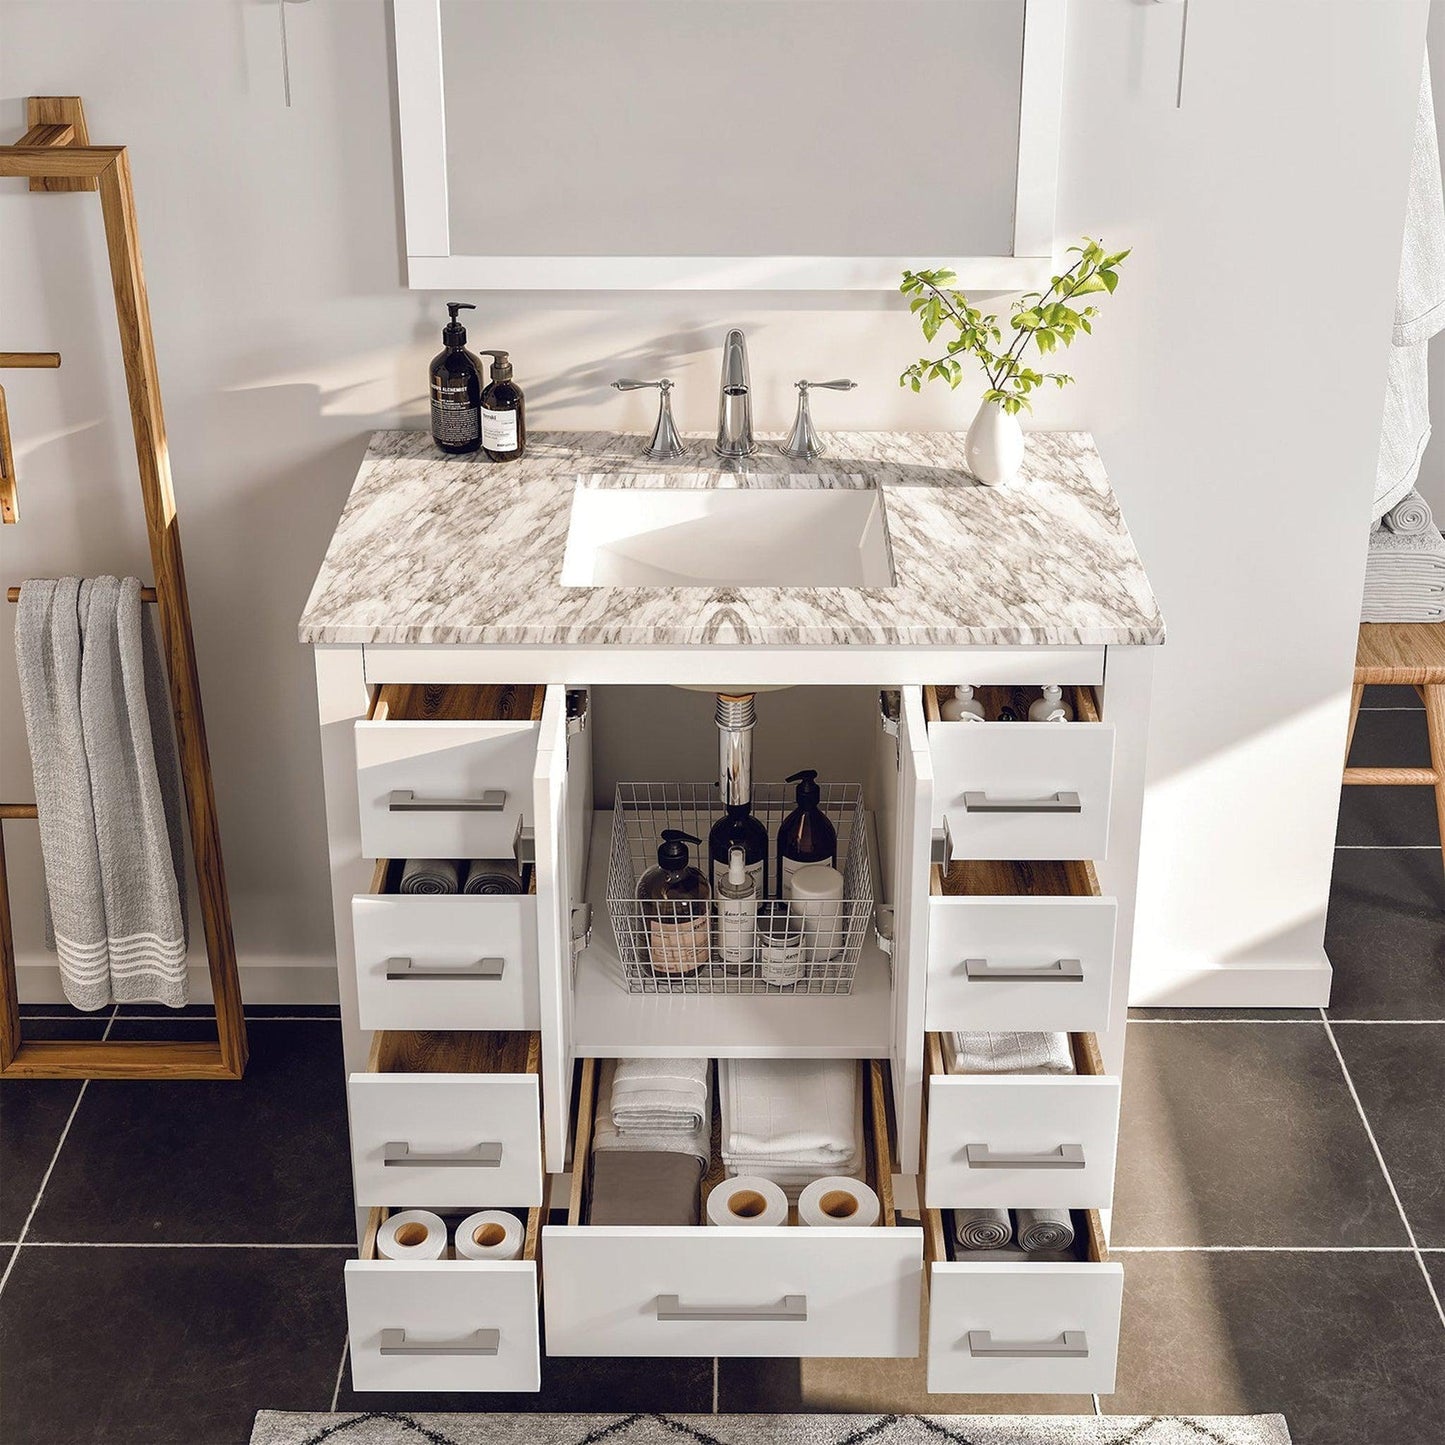 Eviva Hampton 36" x 34" White Freestanding Bathroom Vanity With Marble Carrara Countertop and Single Undermount Sink